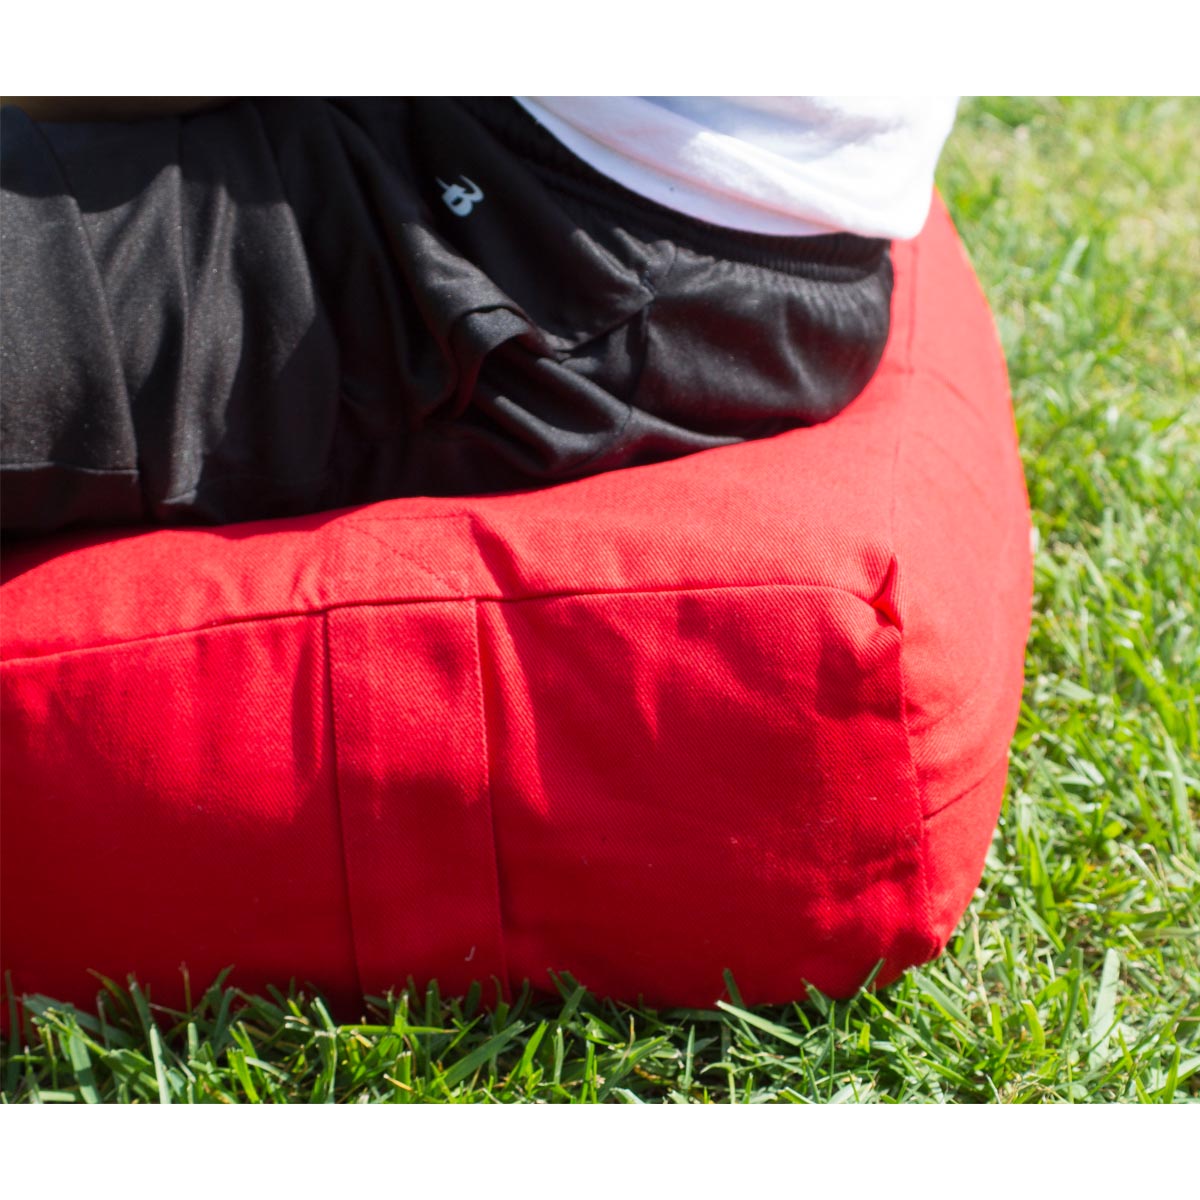 Yoga Accessories Supportive Round Cotton Restorative Yoga Bolster Pillow,  Orange, 1 Piece - Kroger